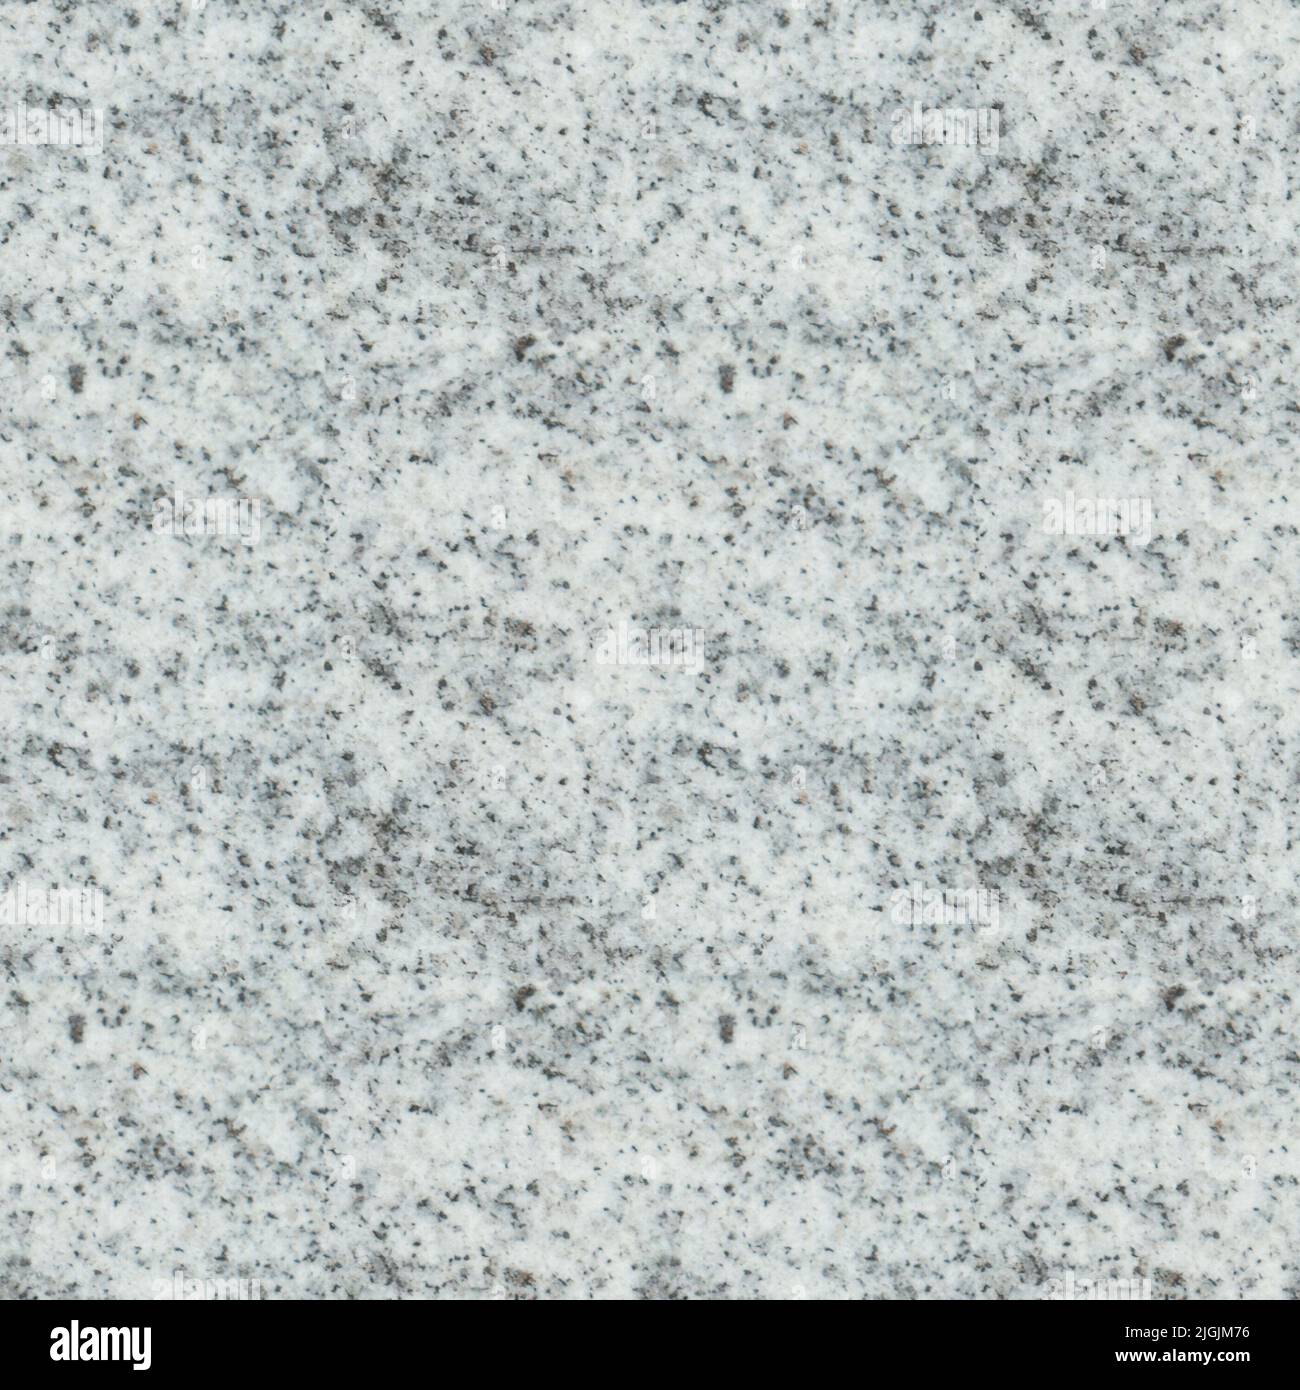 Gray mottled granite. Natural stone texture seamless pattern Stock Photo